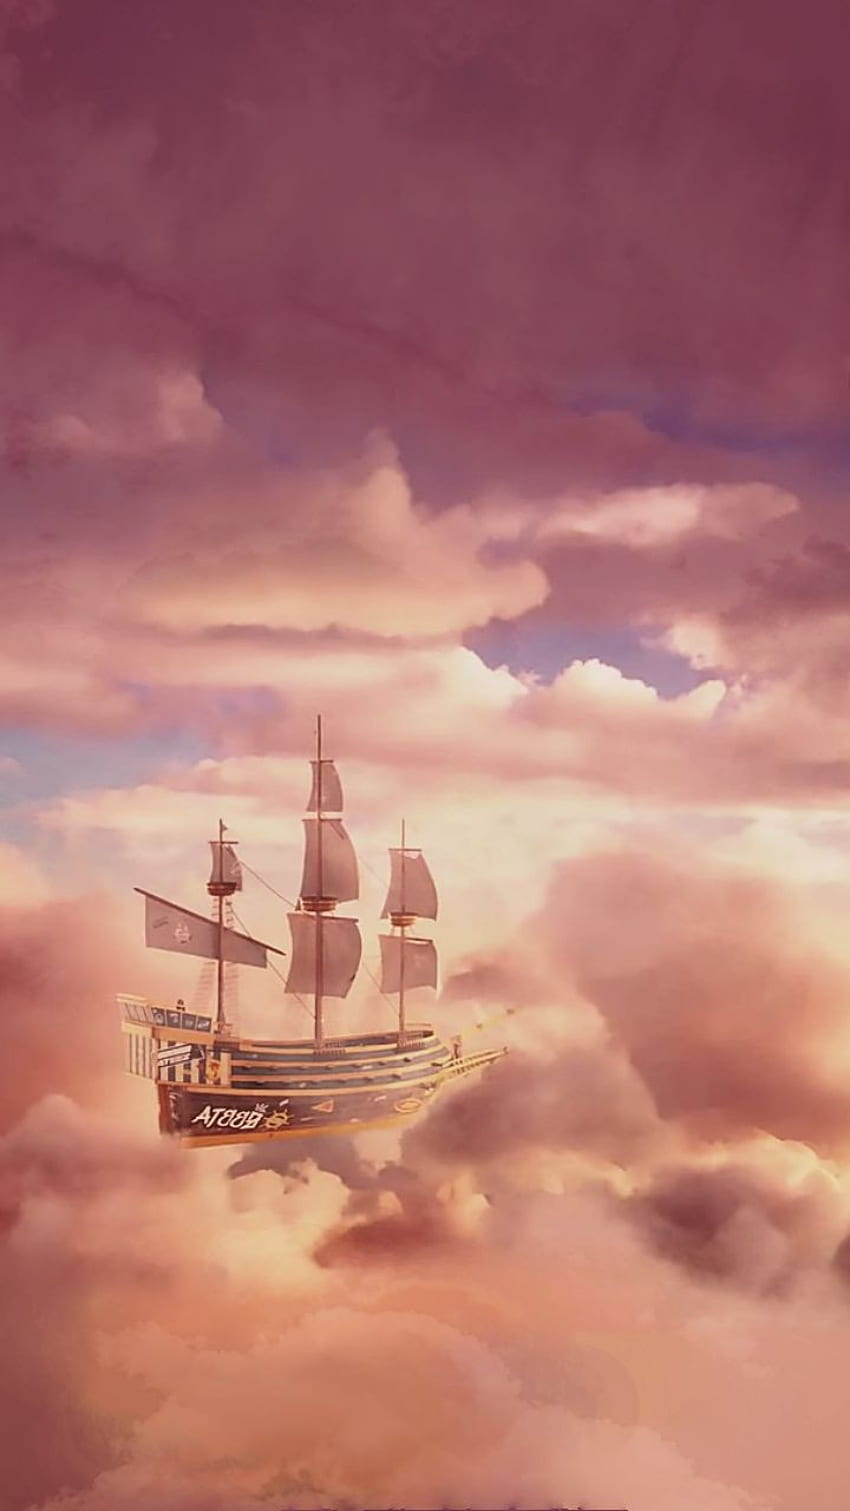 A ship sailing through the clouds - Pirate